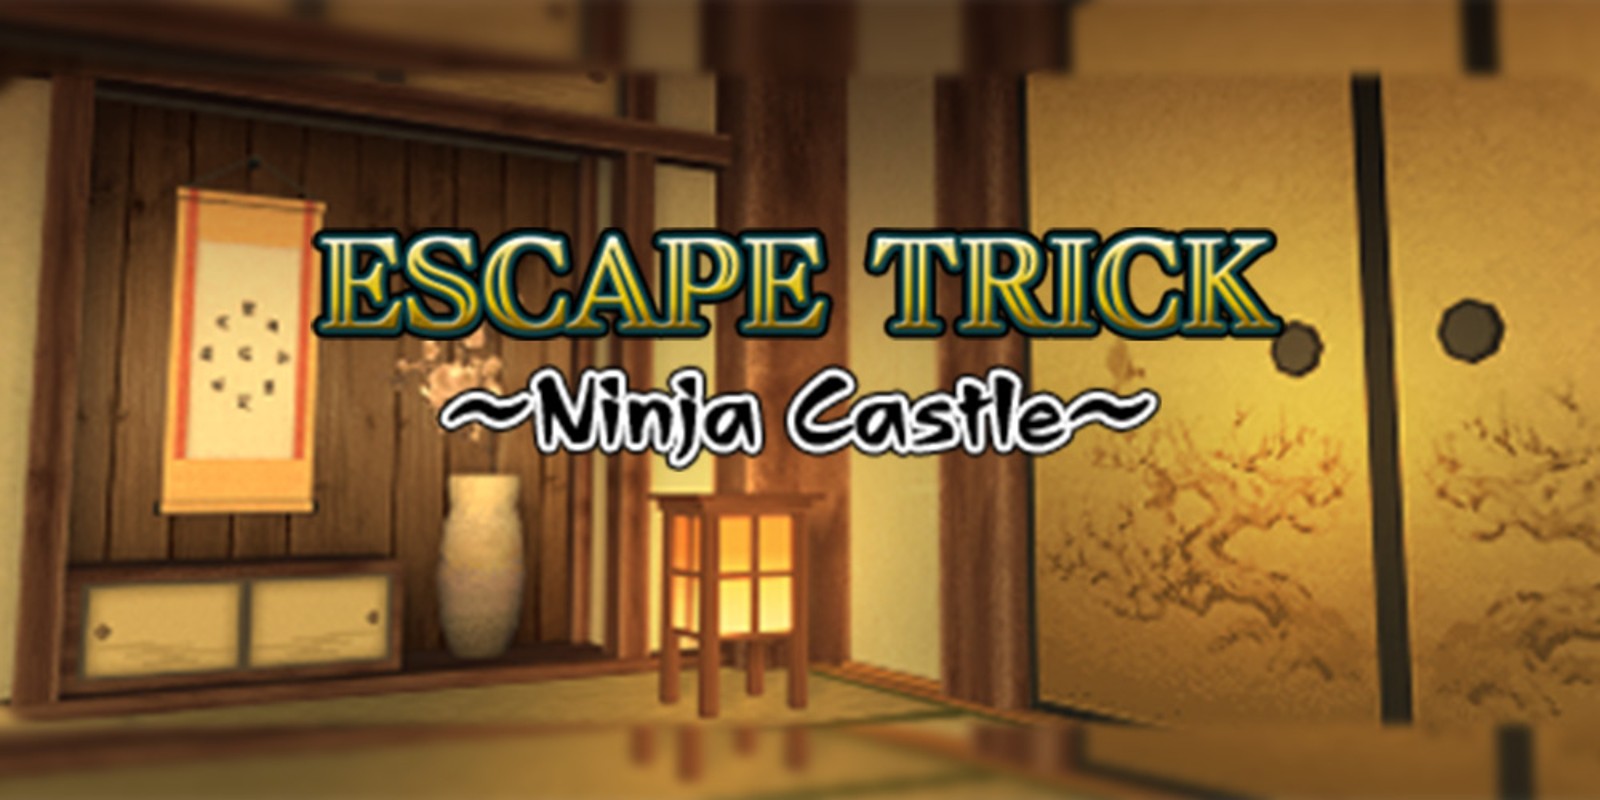 GO Series: Escape Trick - Ninja Castle